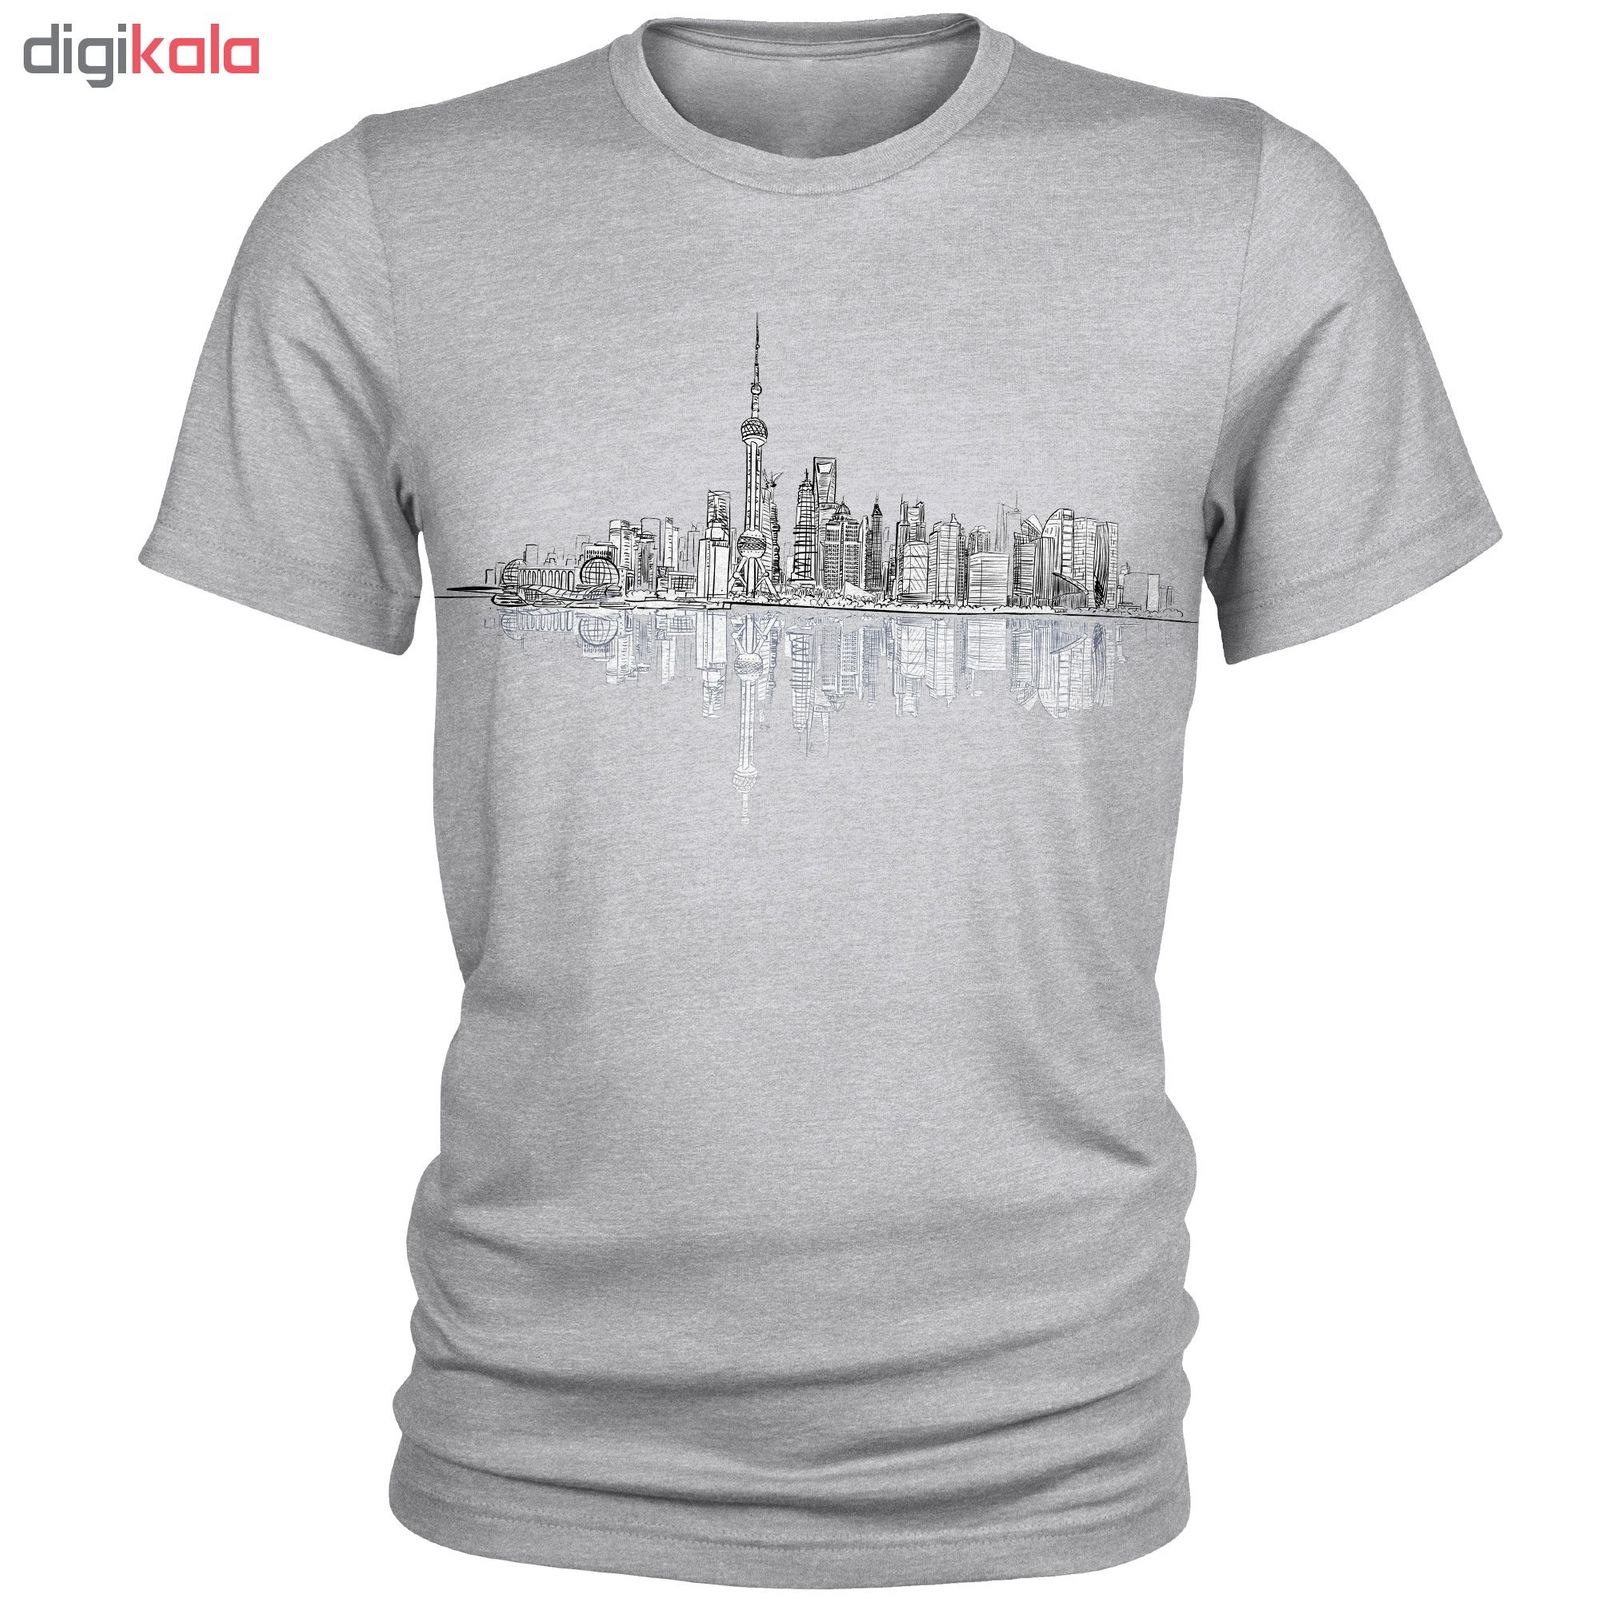 تی شرت مردانه طرح City کد A058 